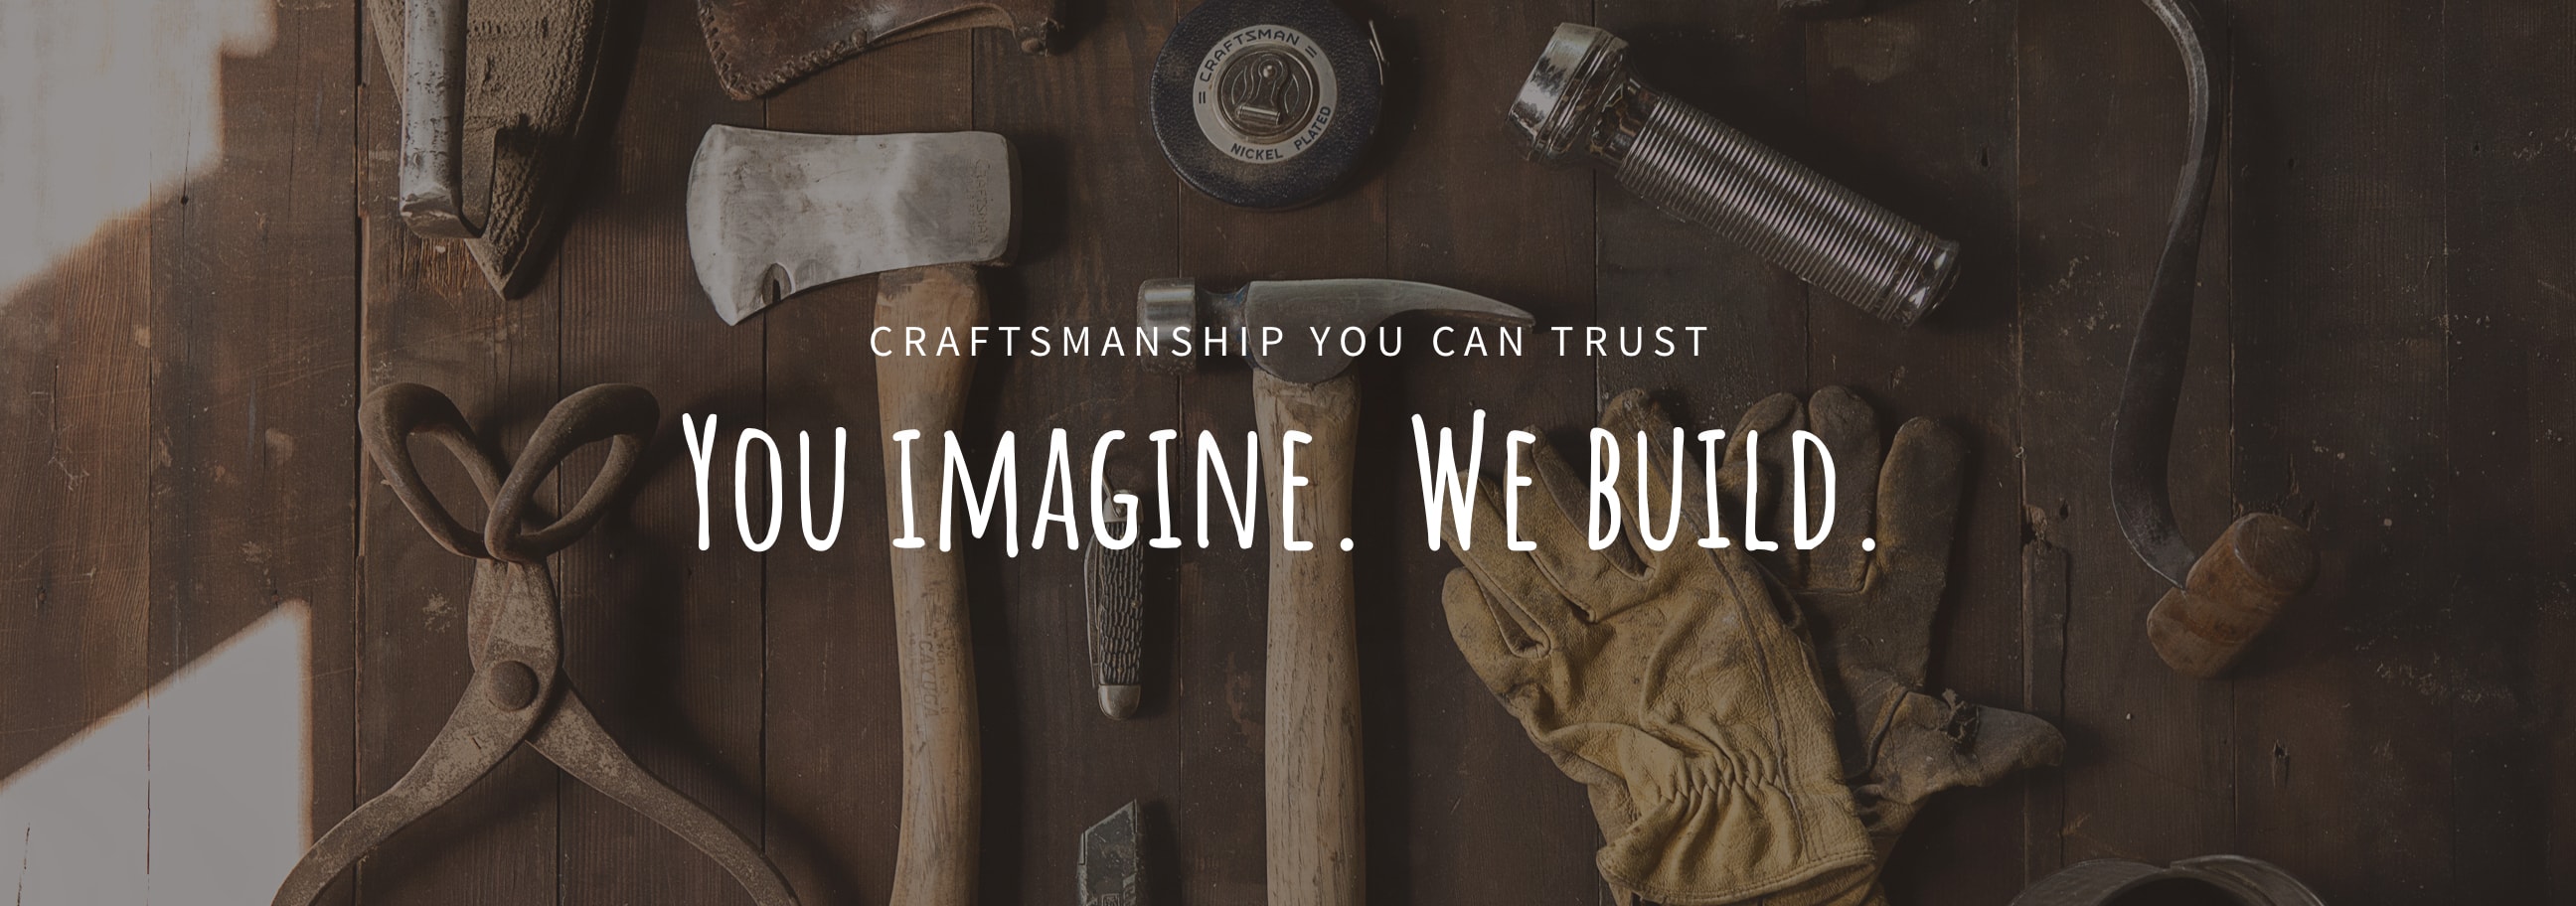 Craftsmanship you can trust. You Imagine. We Build.